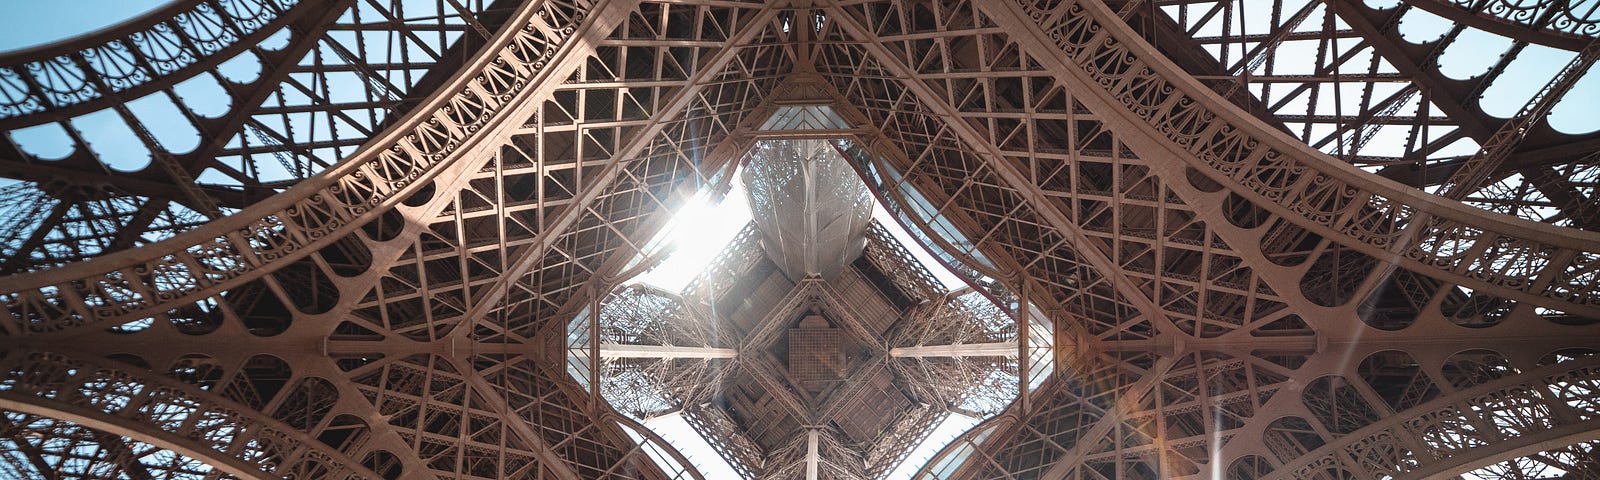 Framework of Eiffel Tower from below